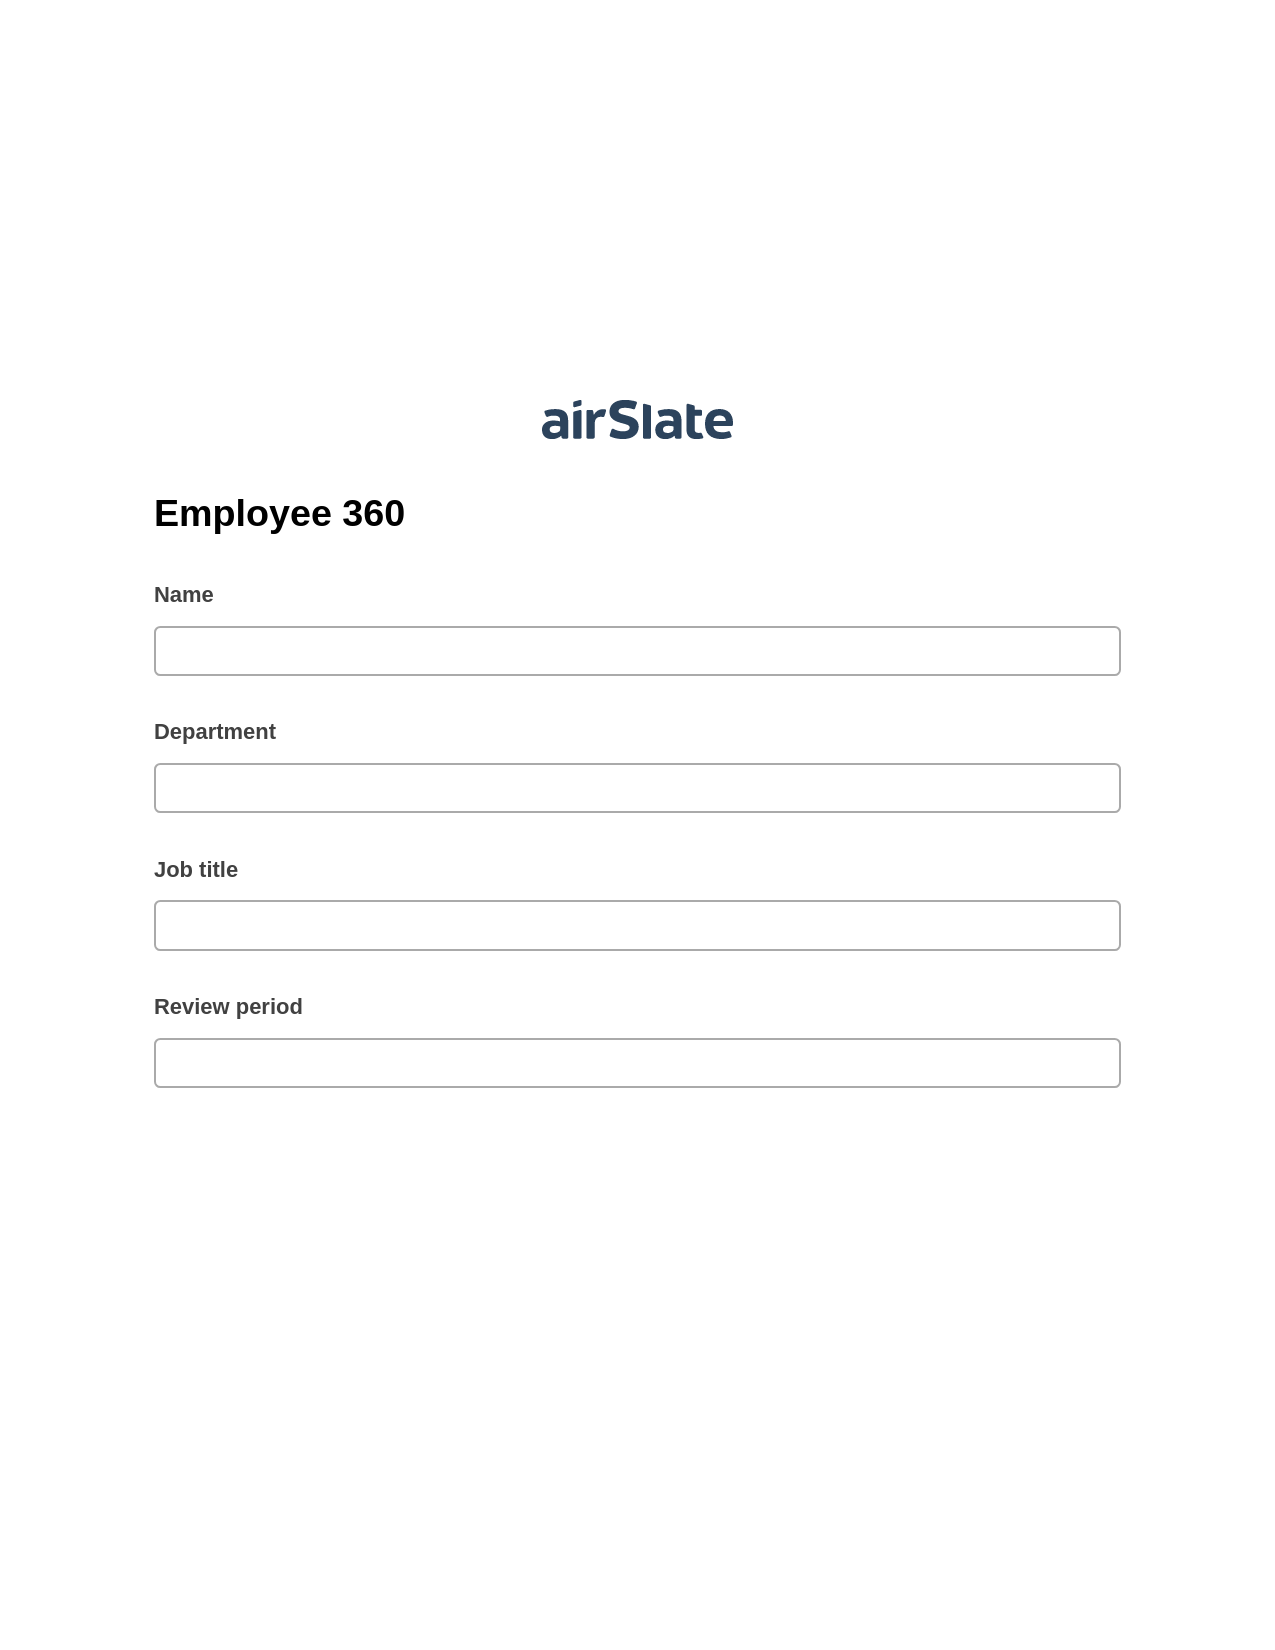 Employee 360 Pre-fill from Salesforce Records Bot, Invoke Salesforce Process Bot, Archive to Dropbox Bot